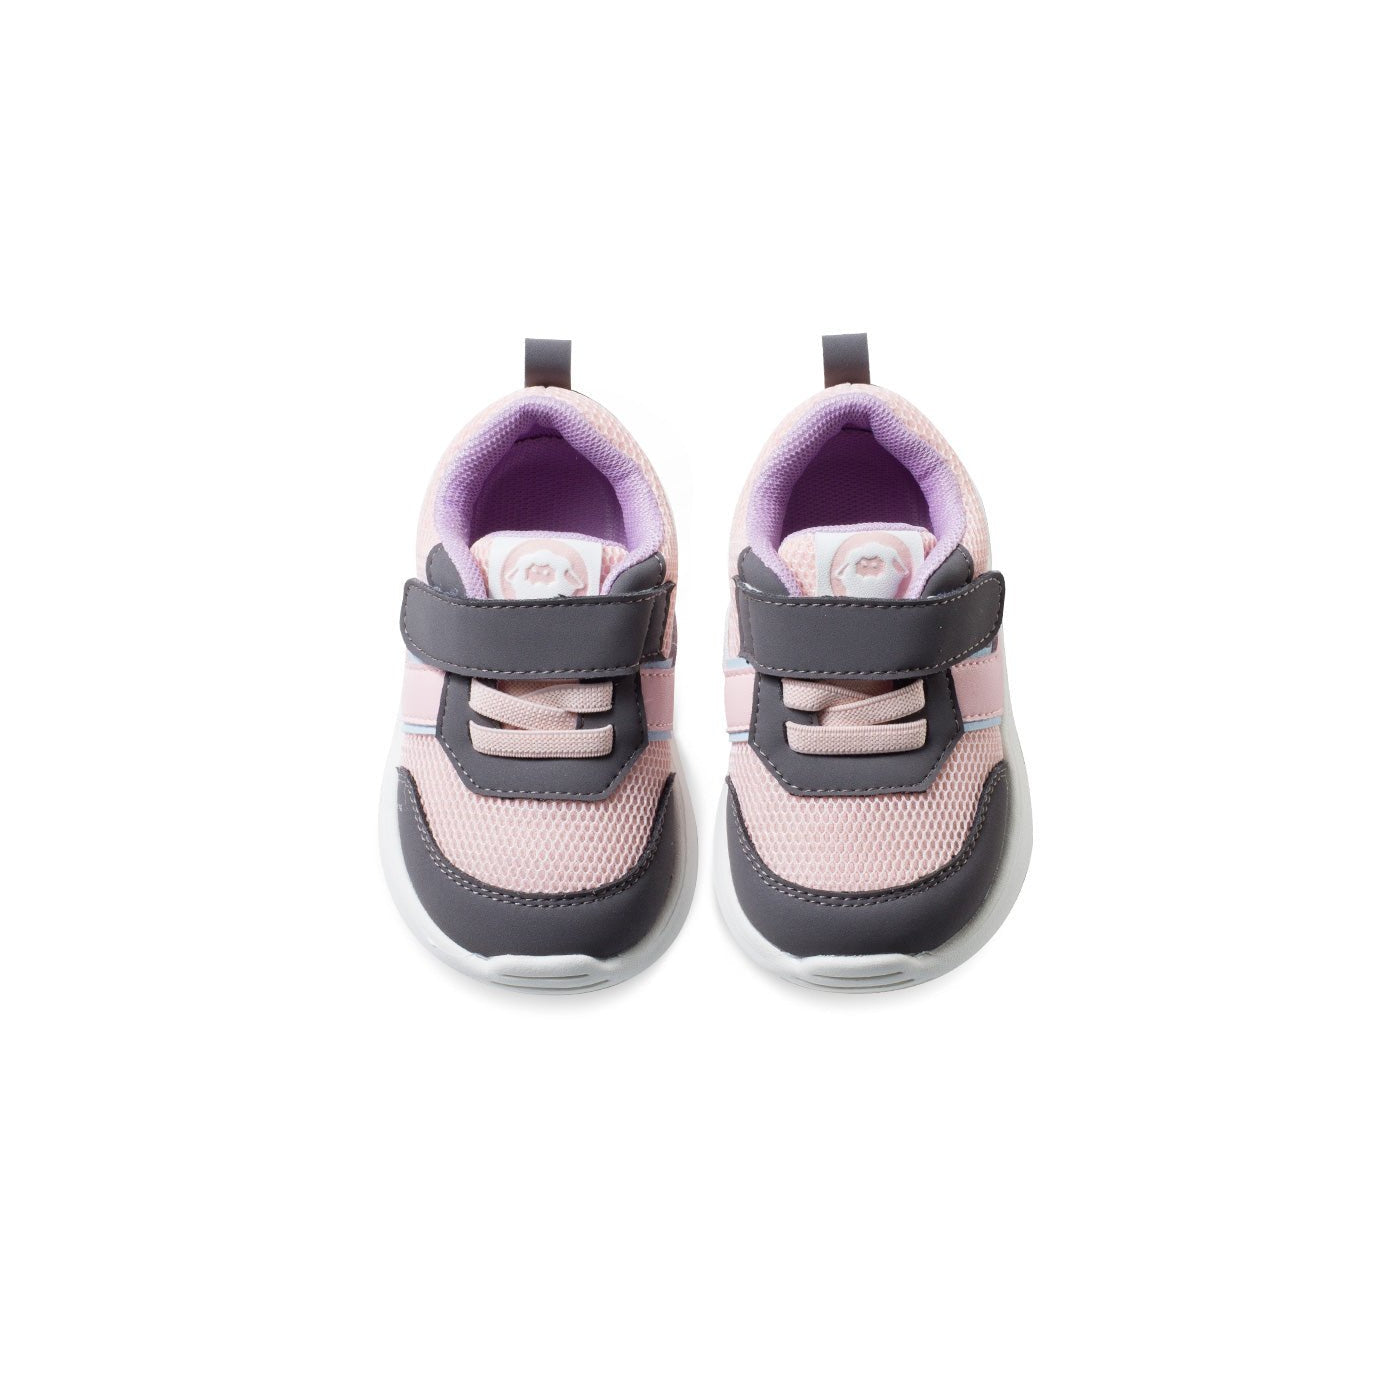 Free Breath Soft Sole Anti-slip Pre-walker Pink Baby Girl Sneakers - 0cm